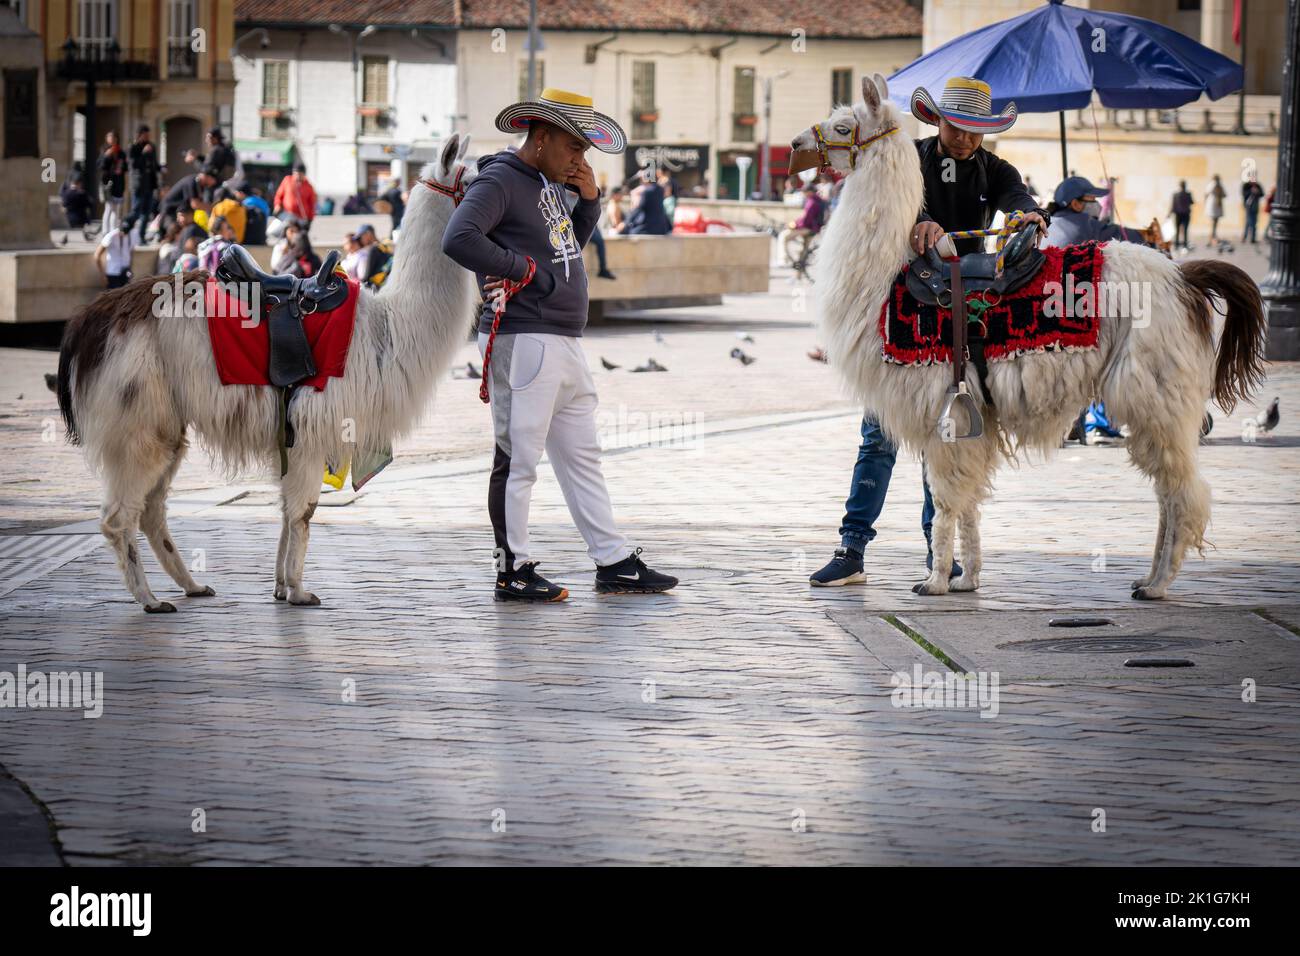 Alpacas in town square in Bogota, Colombia Stock Photo